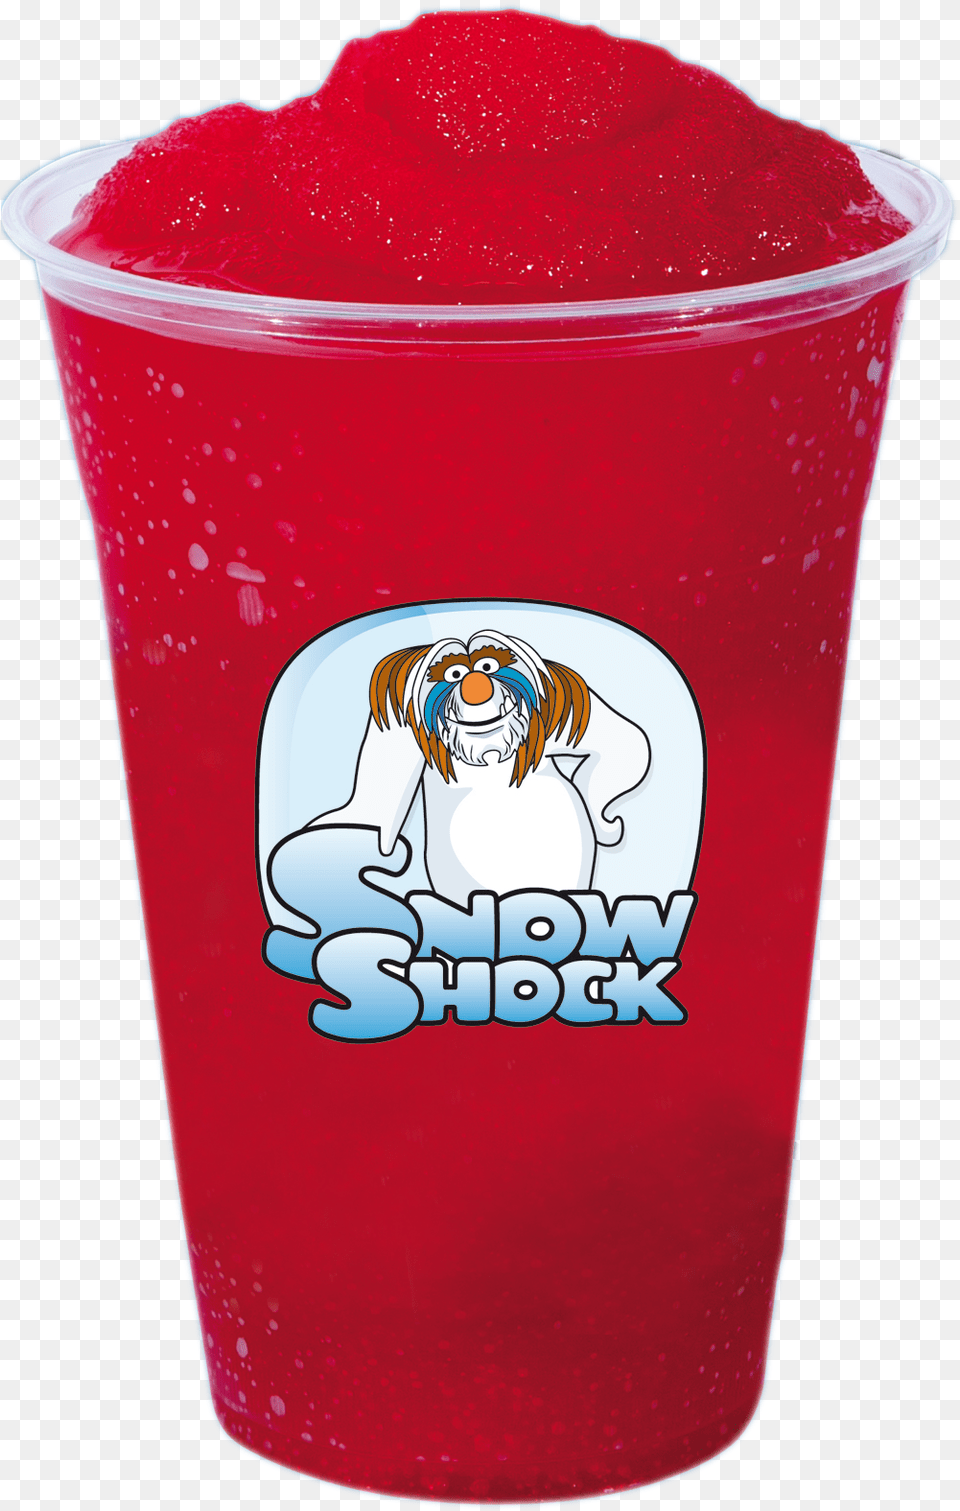 Snow Shock Slush Machine, Food, Ketchup, Cream, Dessert Png Image